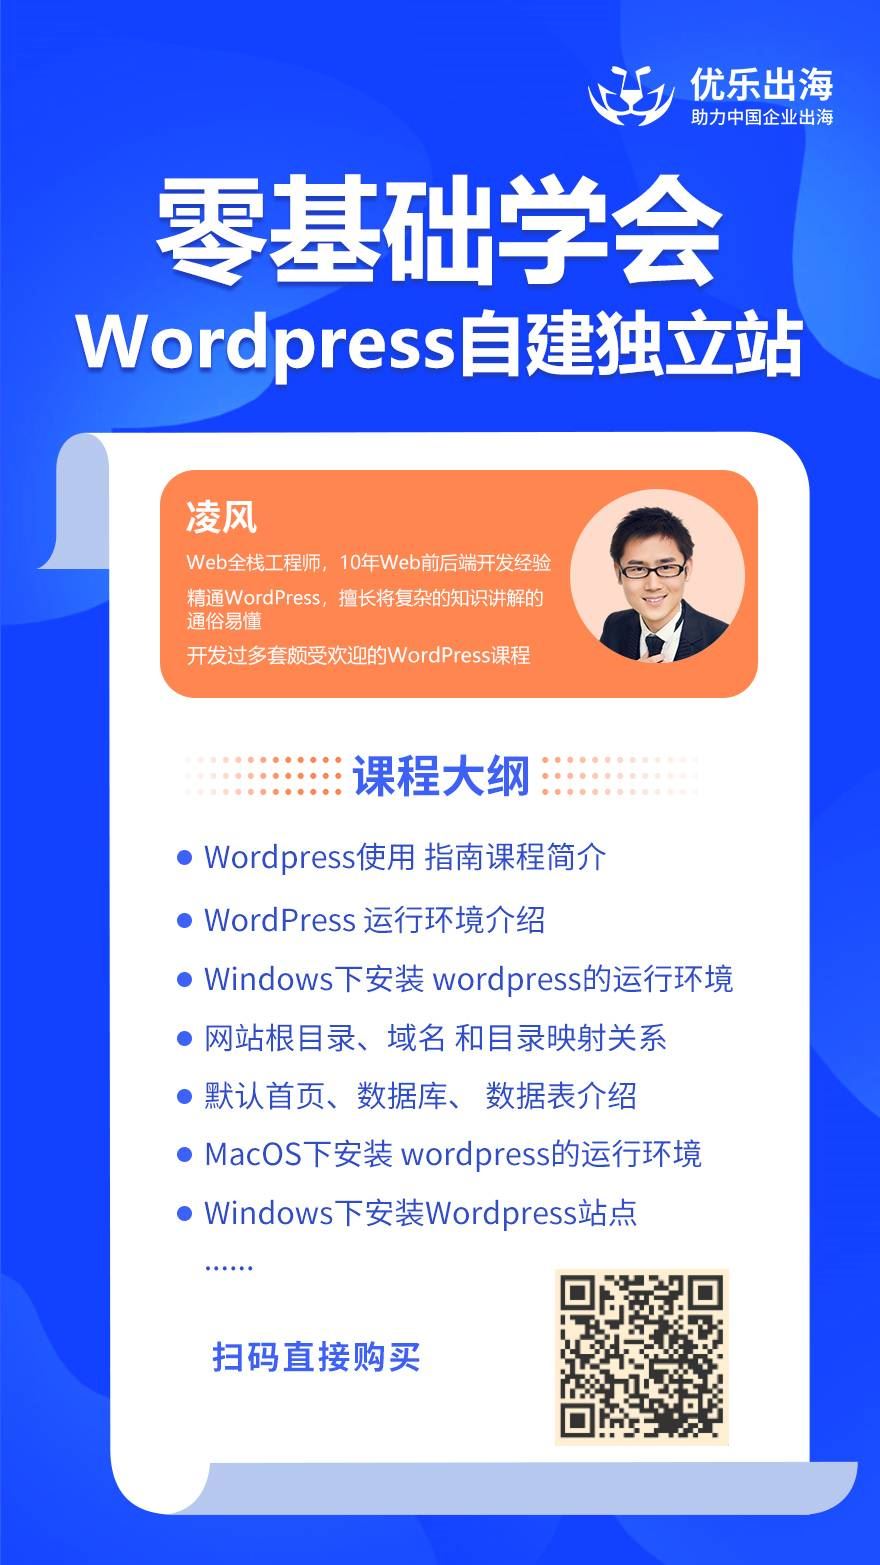 lb993-Wordpress建站从零开始海报-购买版.jpg